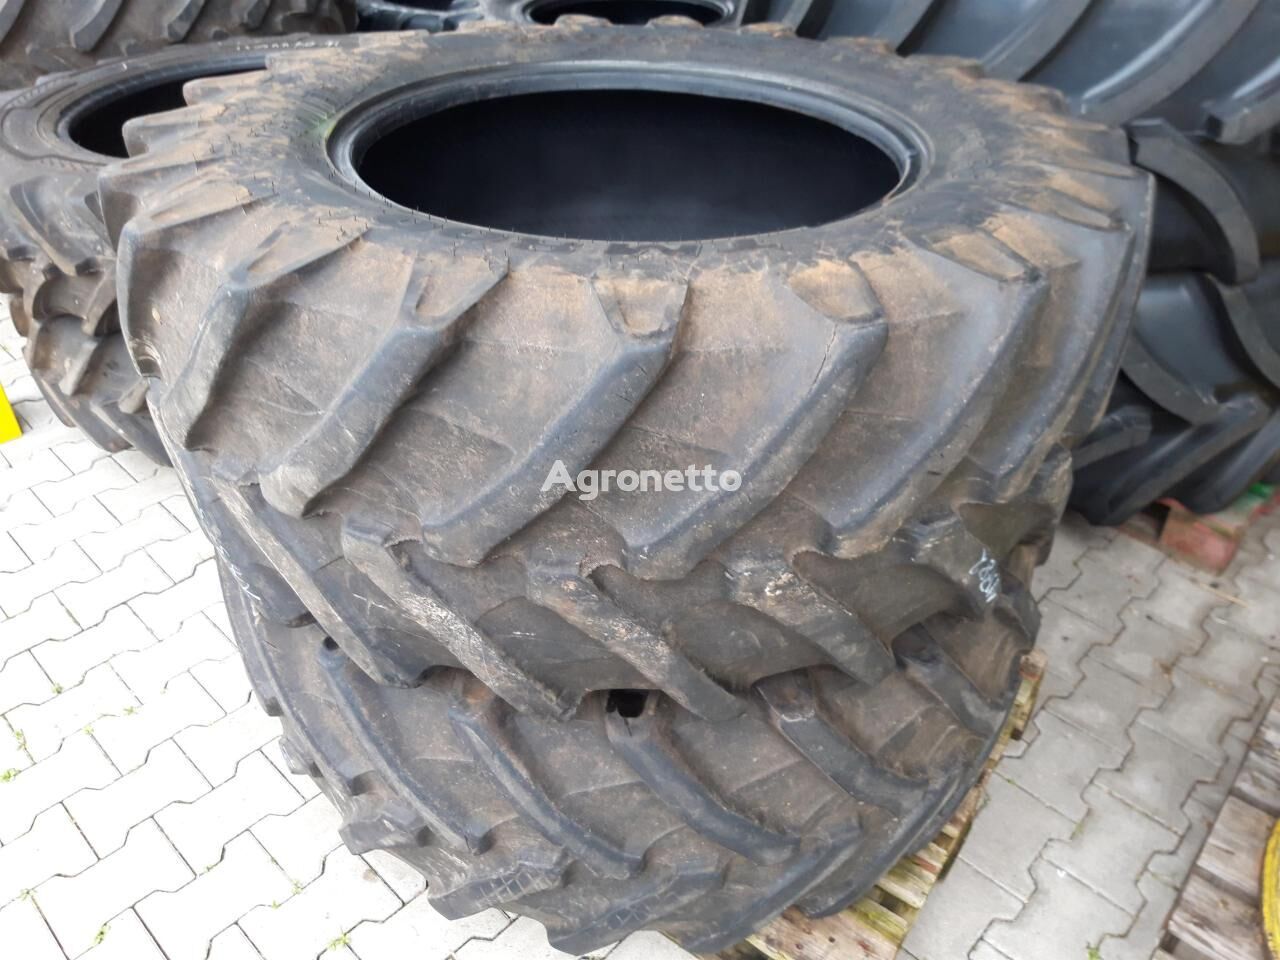 Trelleborg 480/65 R 28 tractor tire